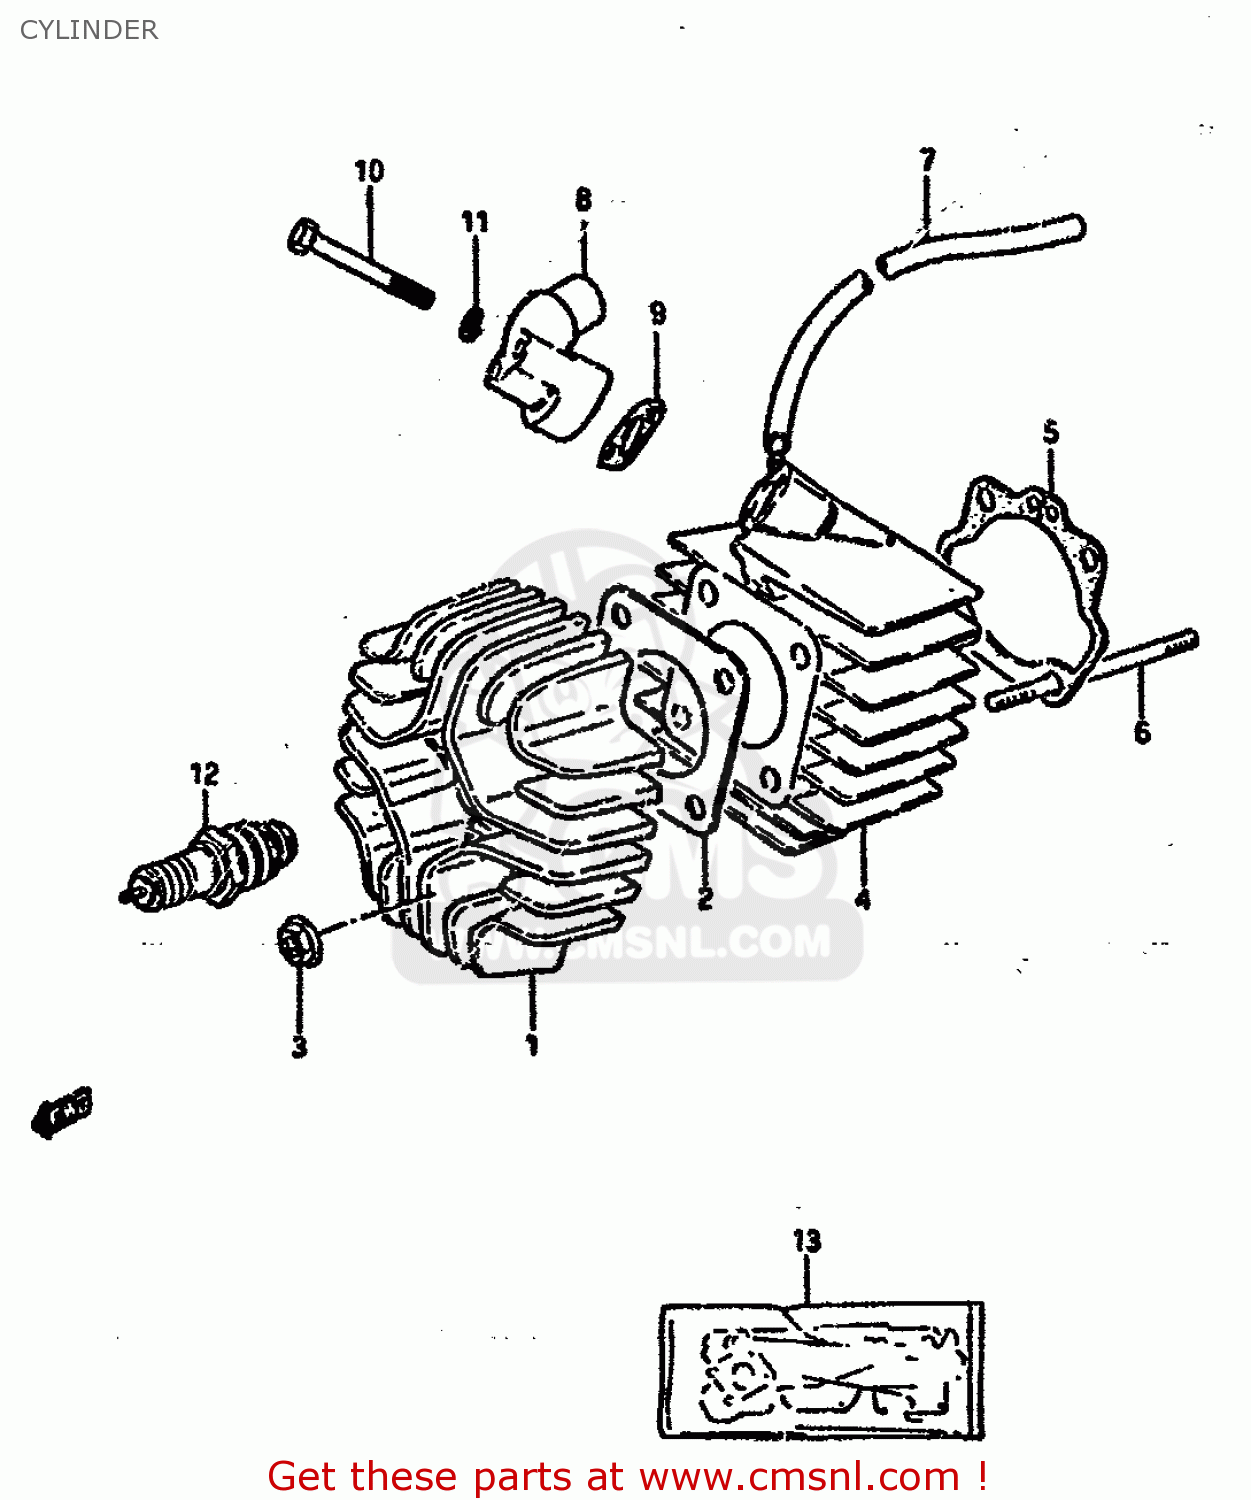 lt50 sport quad wiring diagram